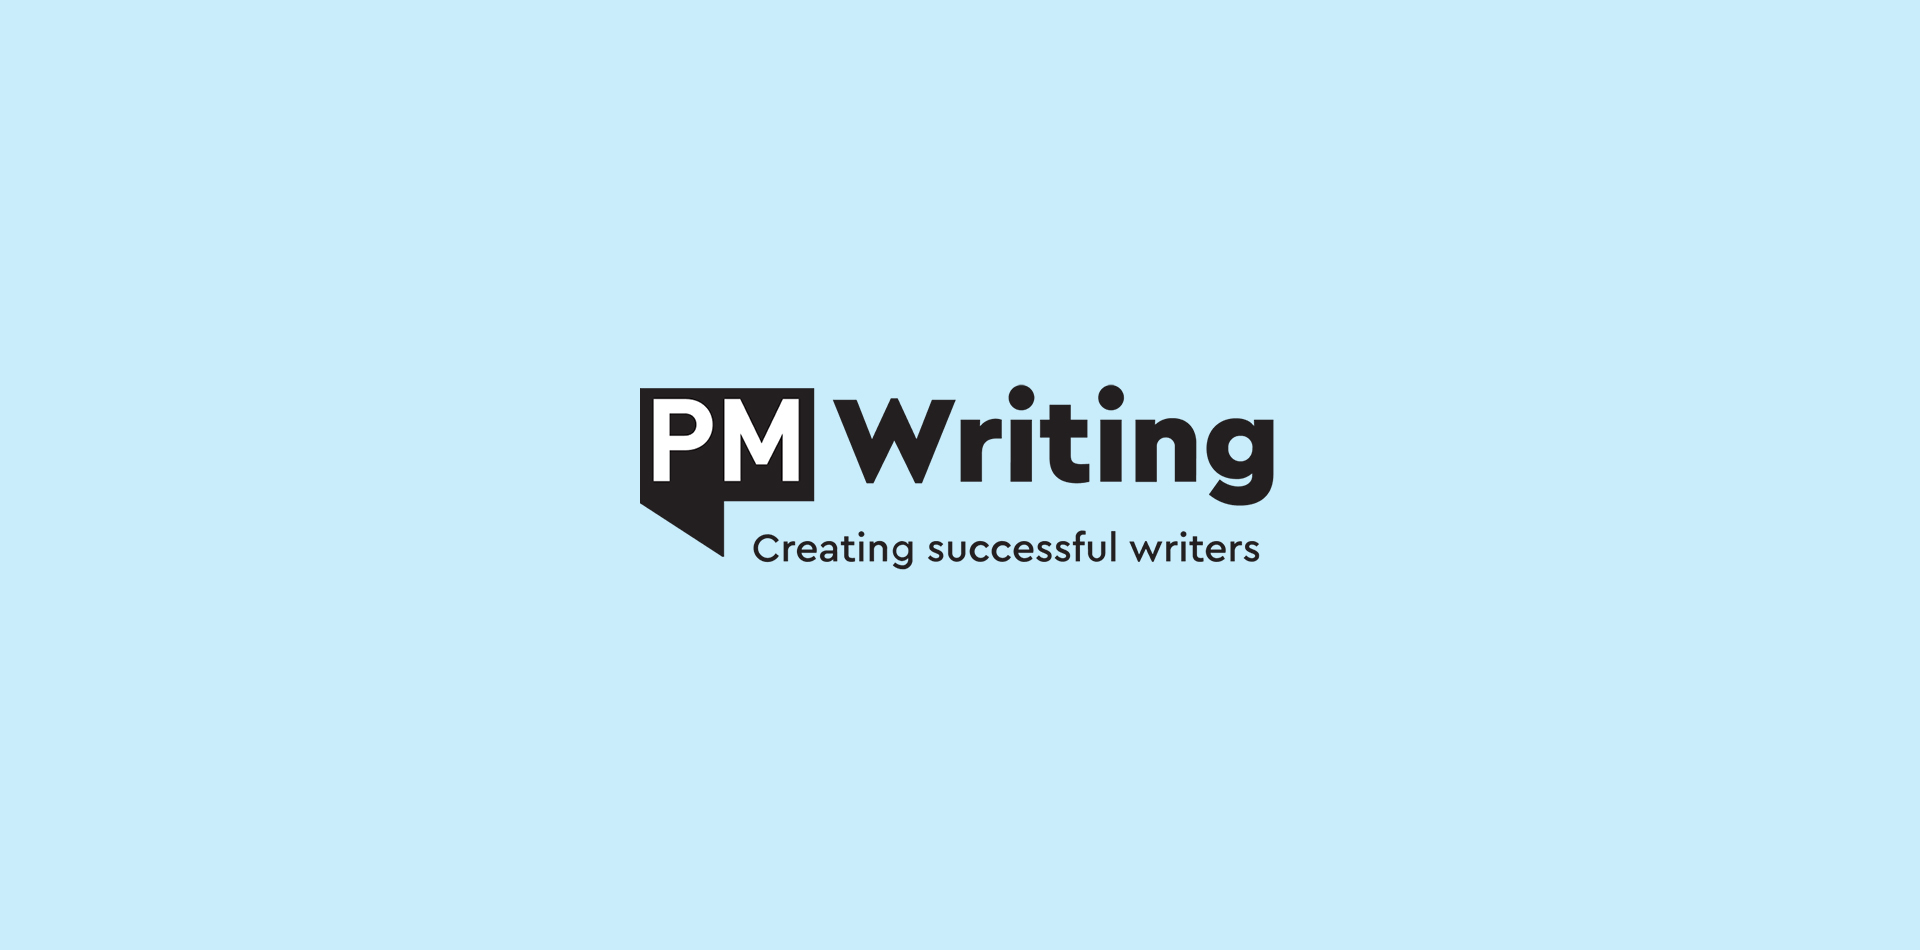 PM Writing